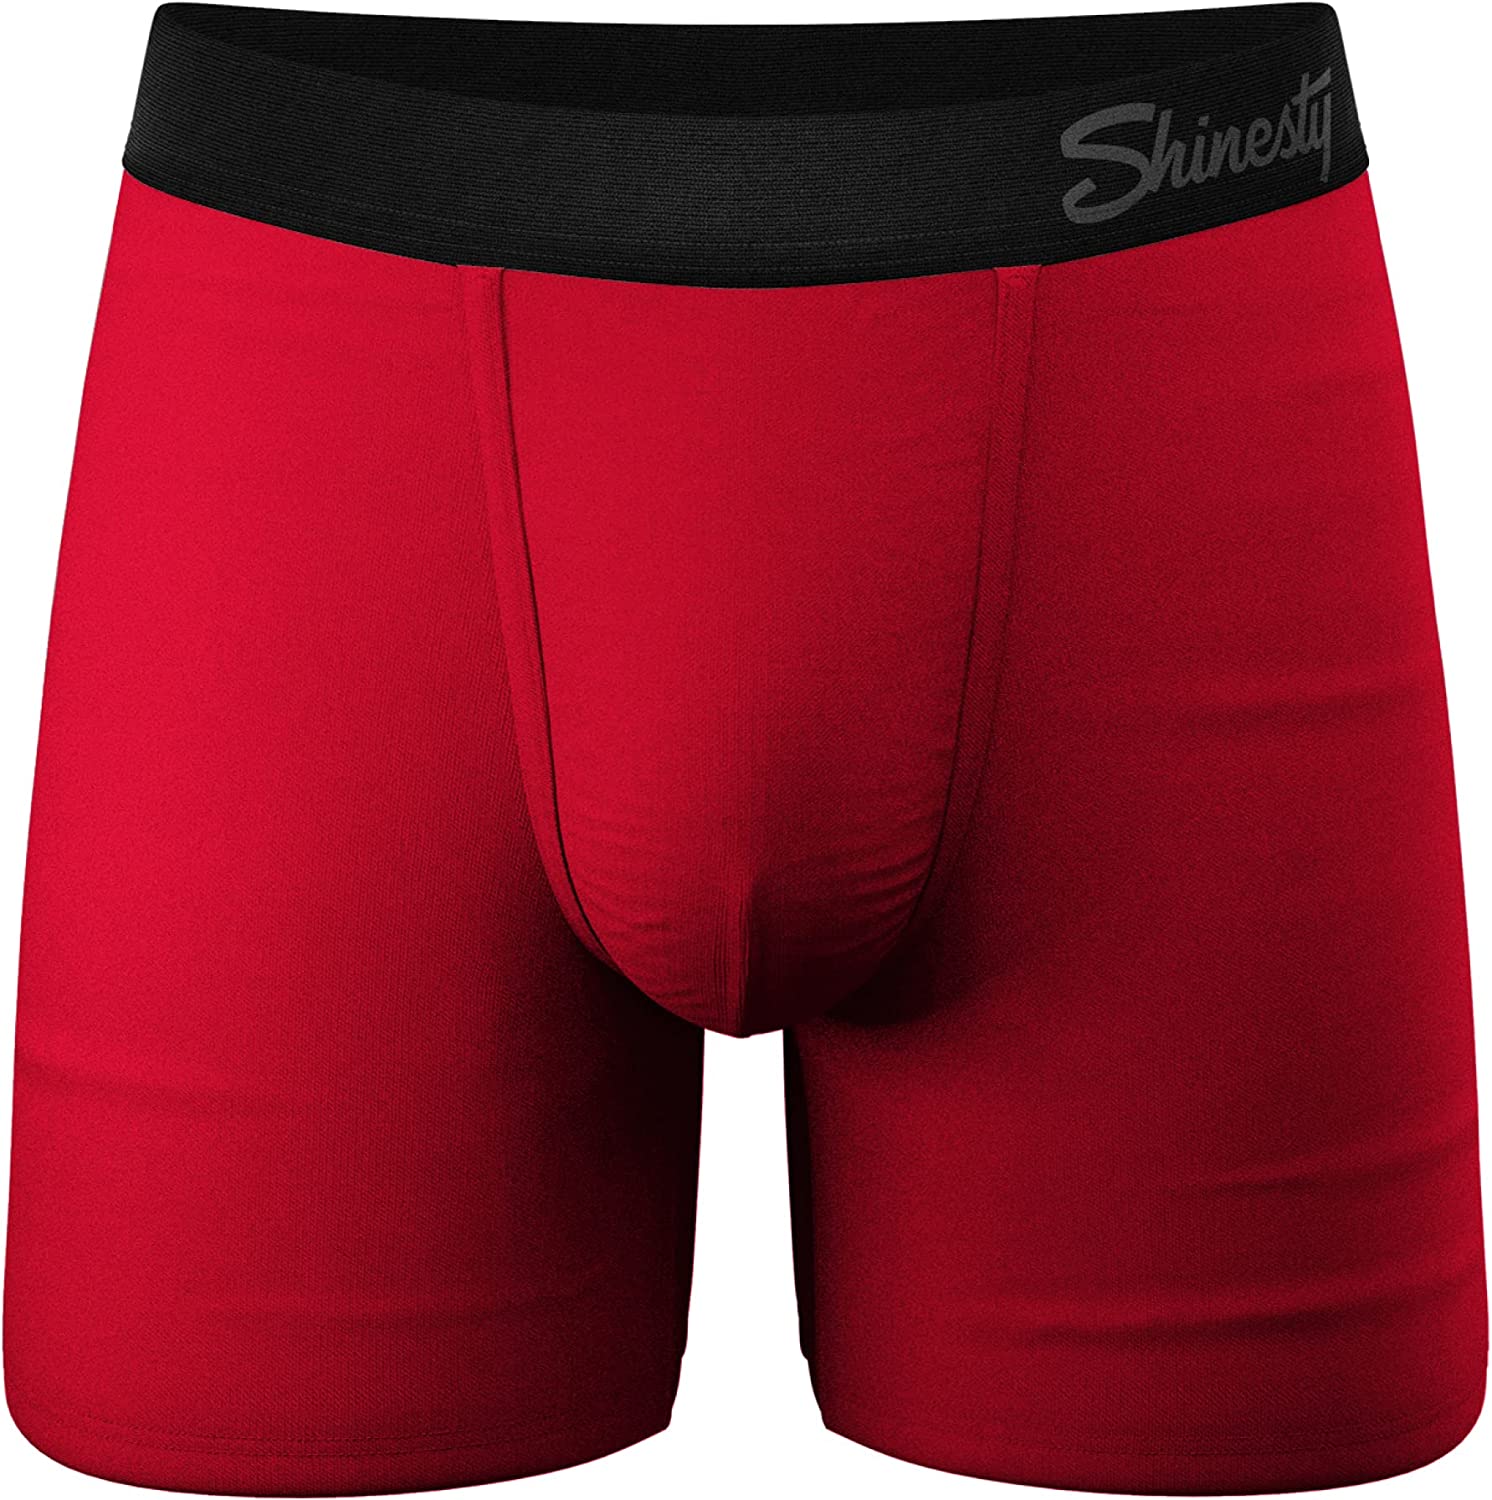 Stance Nevermind Boxer Briefs - Red